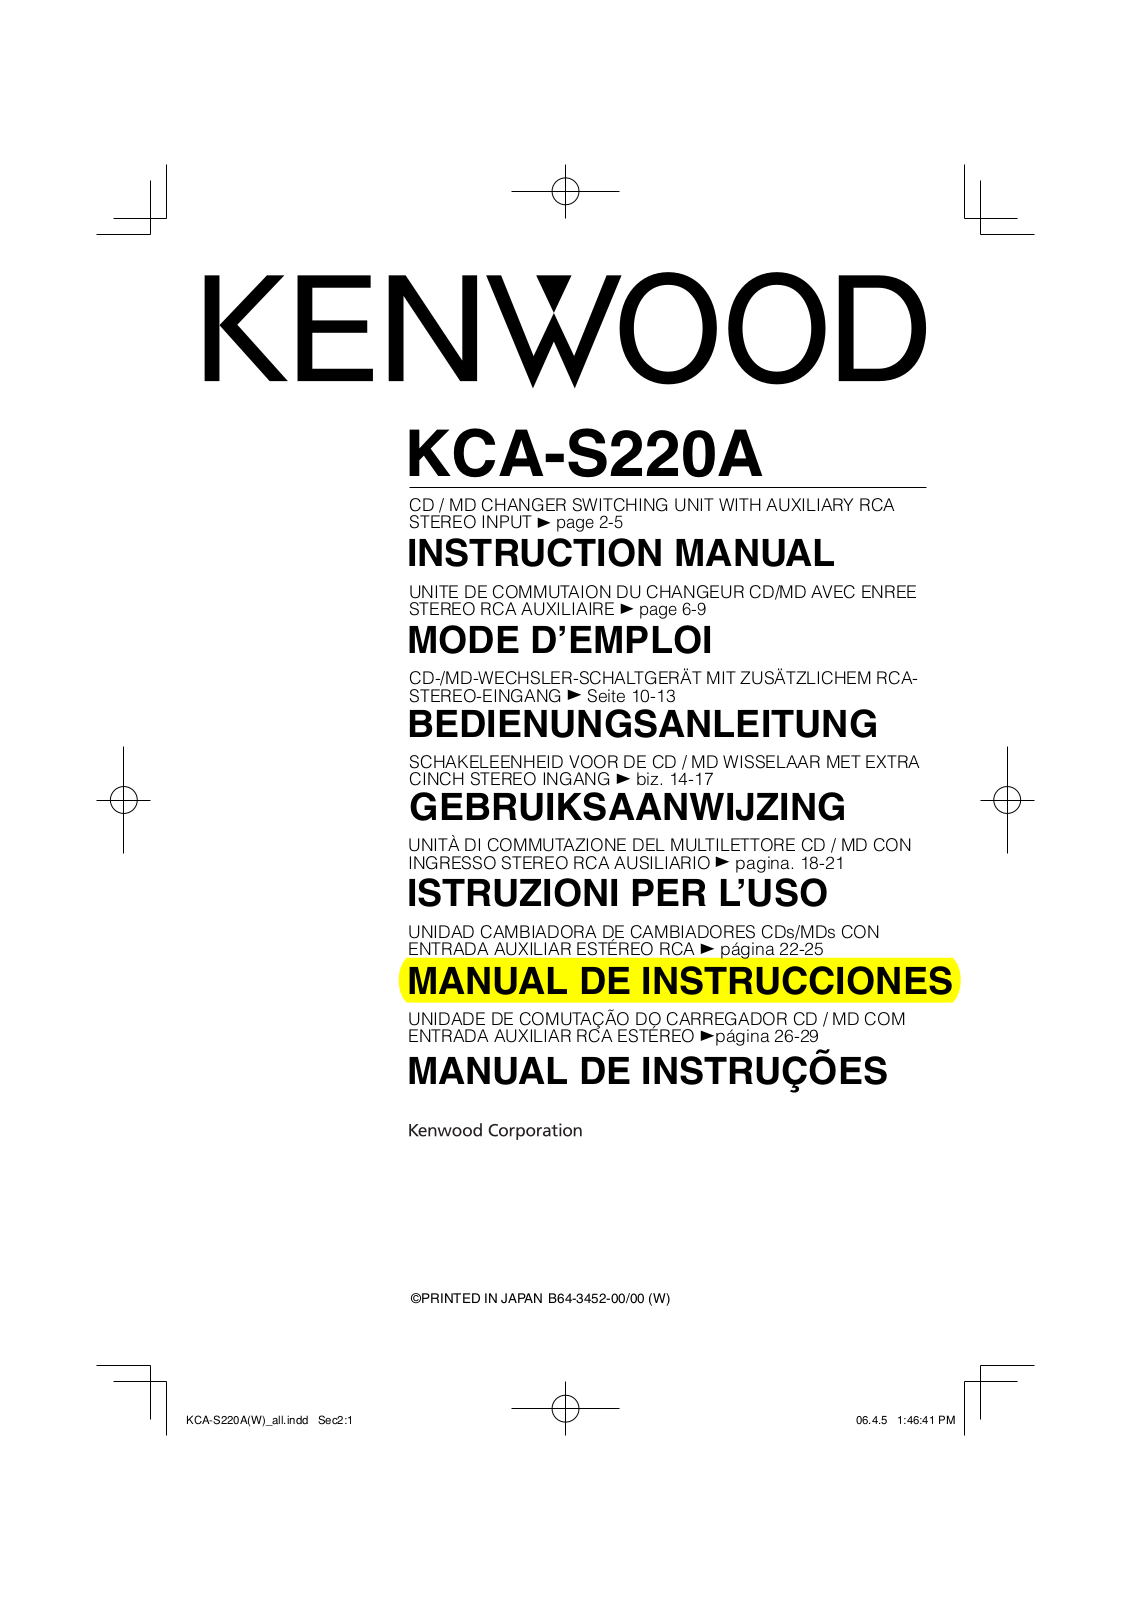 Kenwood KCA-S220A User Manual